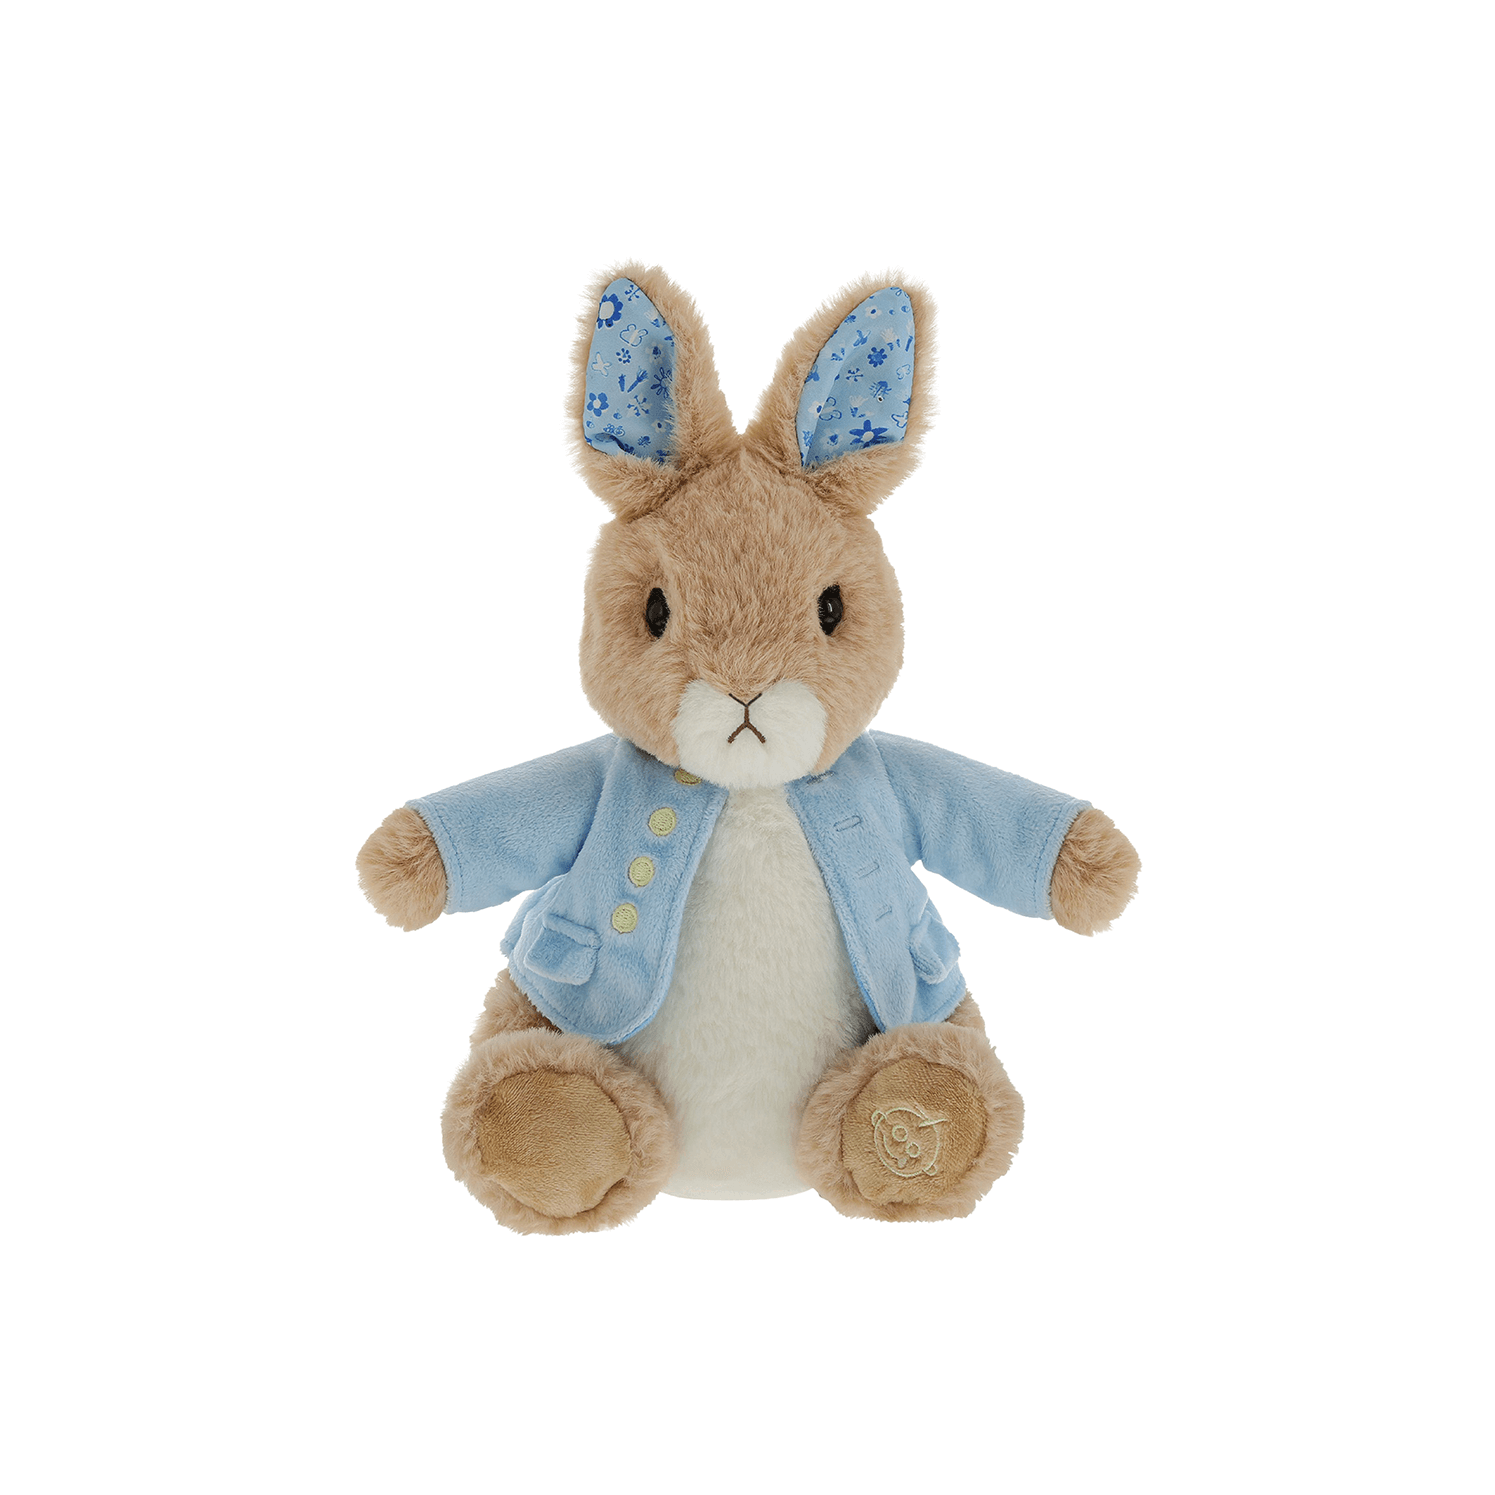 GOSH ARTS Charity Peter Rabbit soft toy